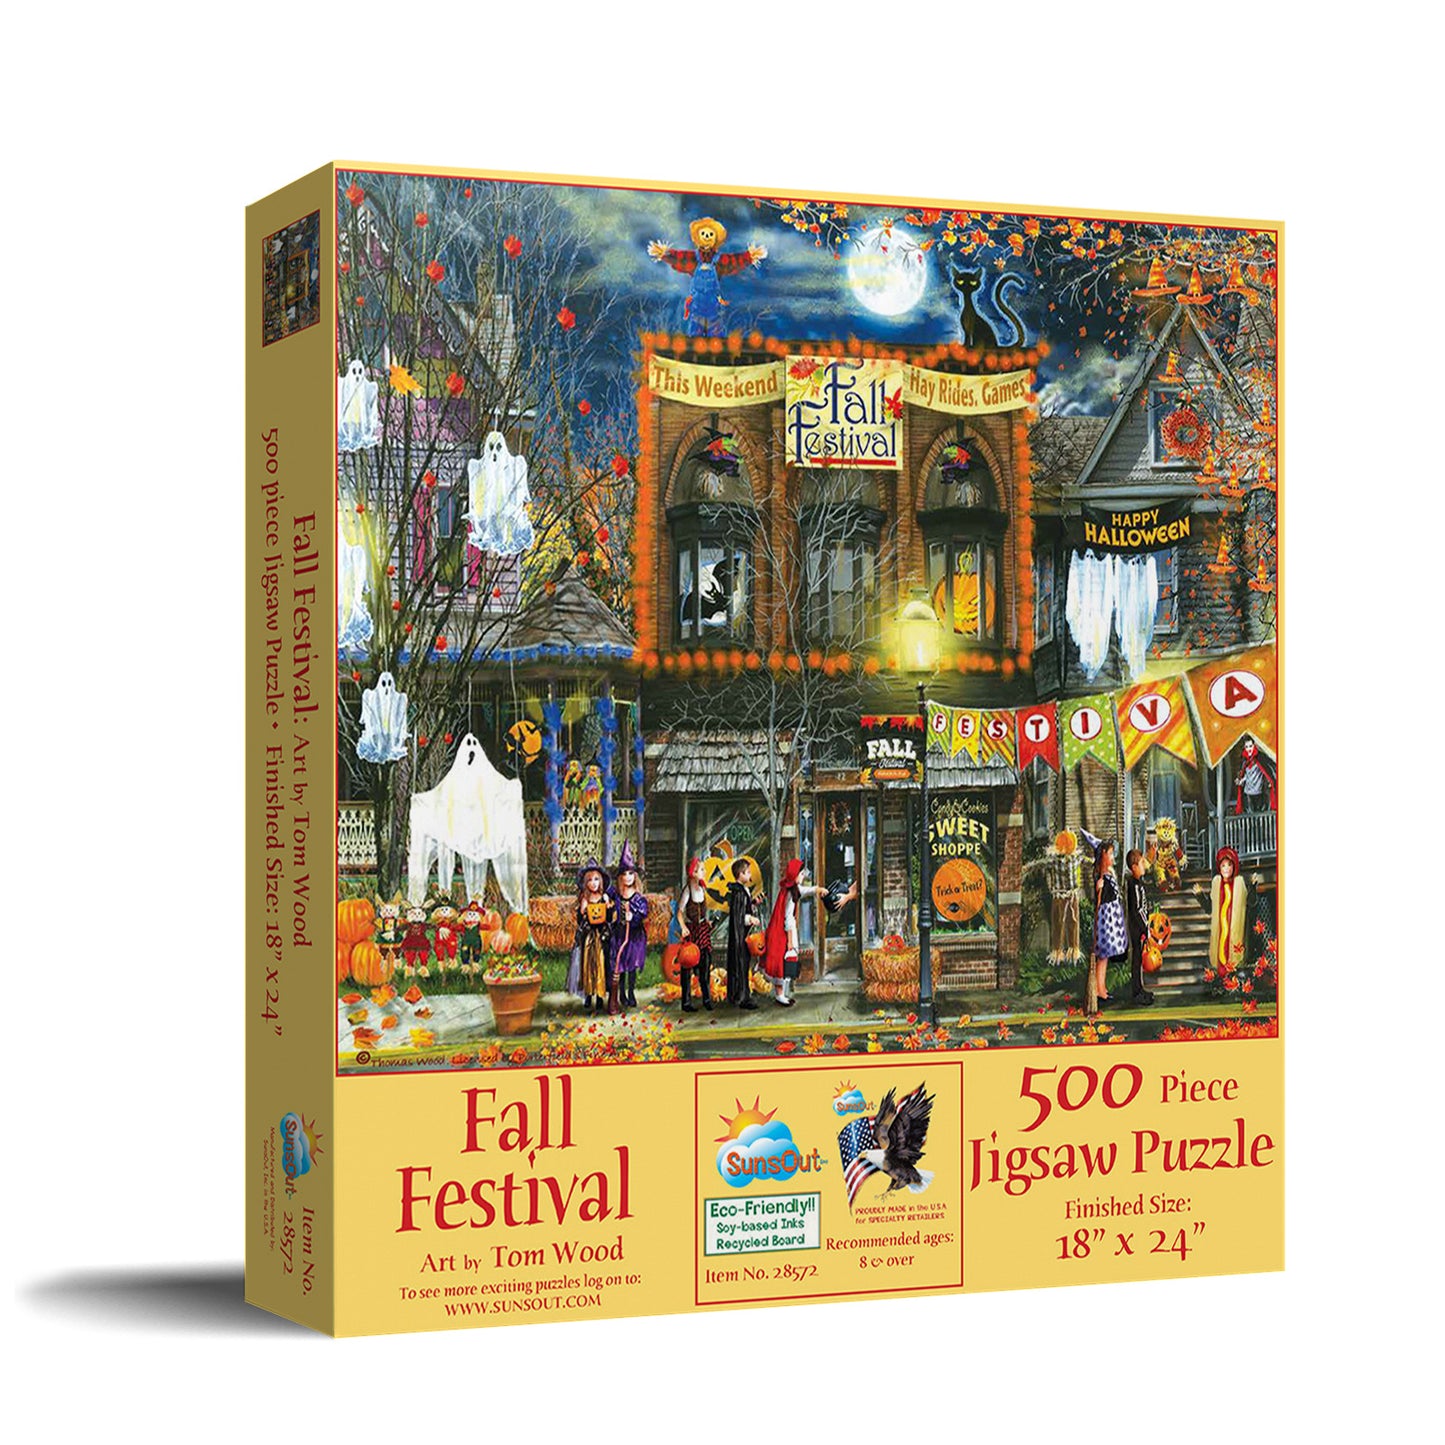 Fall Festival - 500 Piece Jigsaw Puzzle